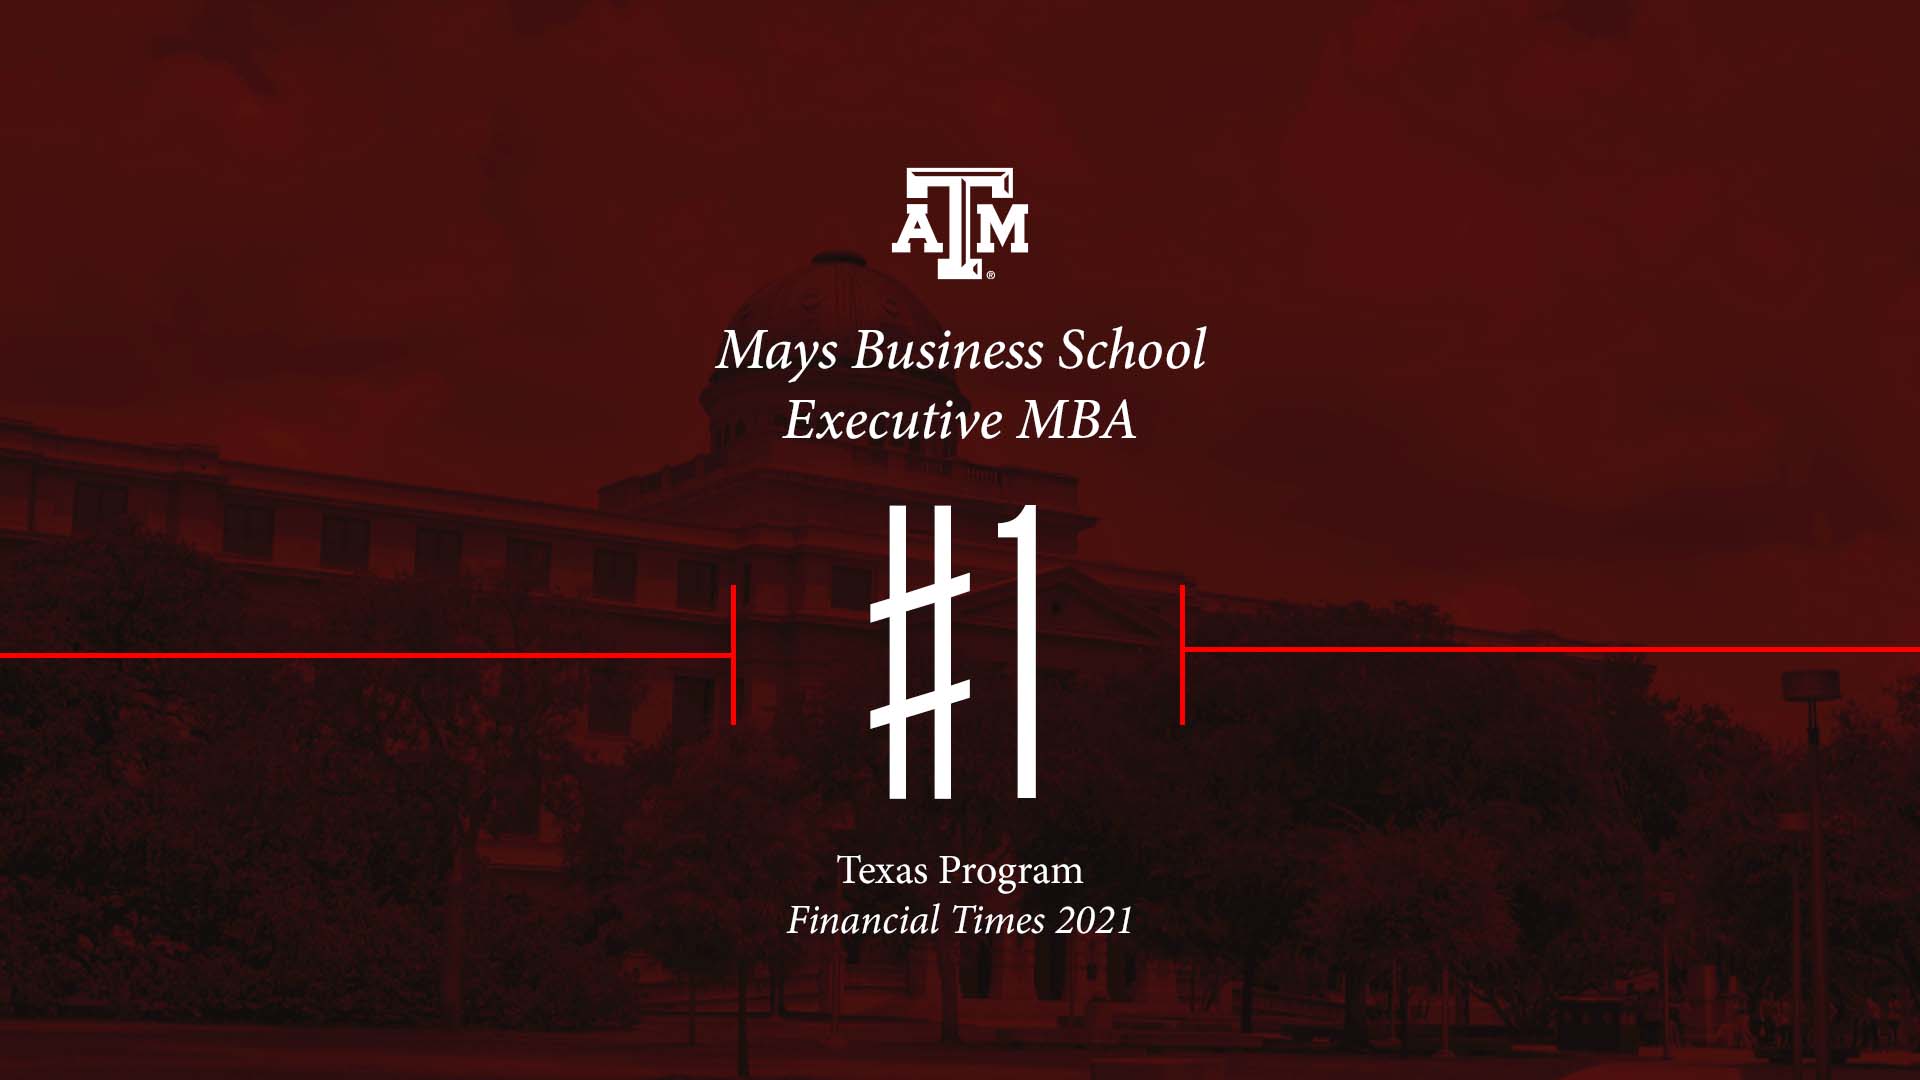 #1 Texas Program - Texas A&M EMBA - Financial Times '21